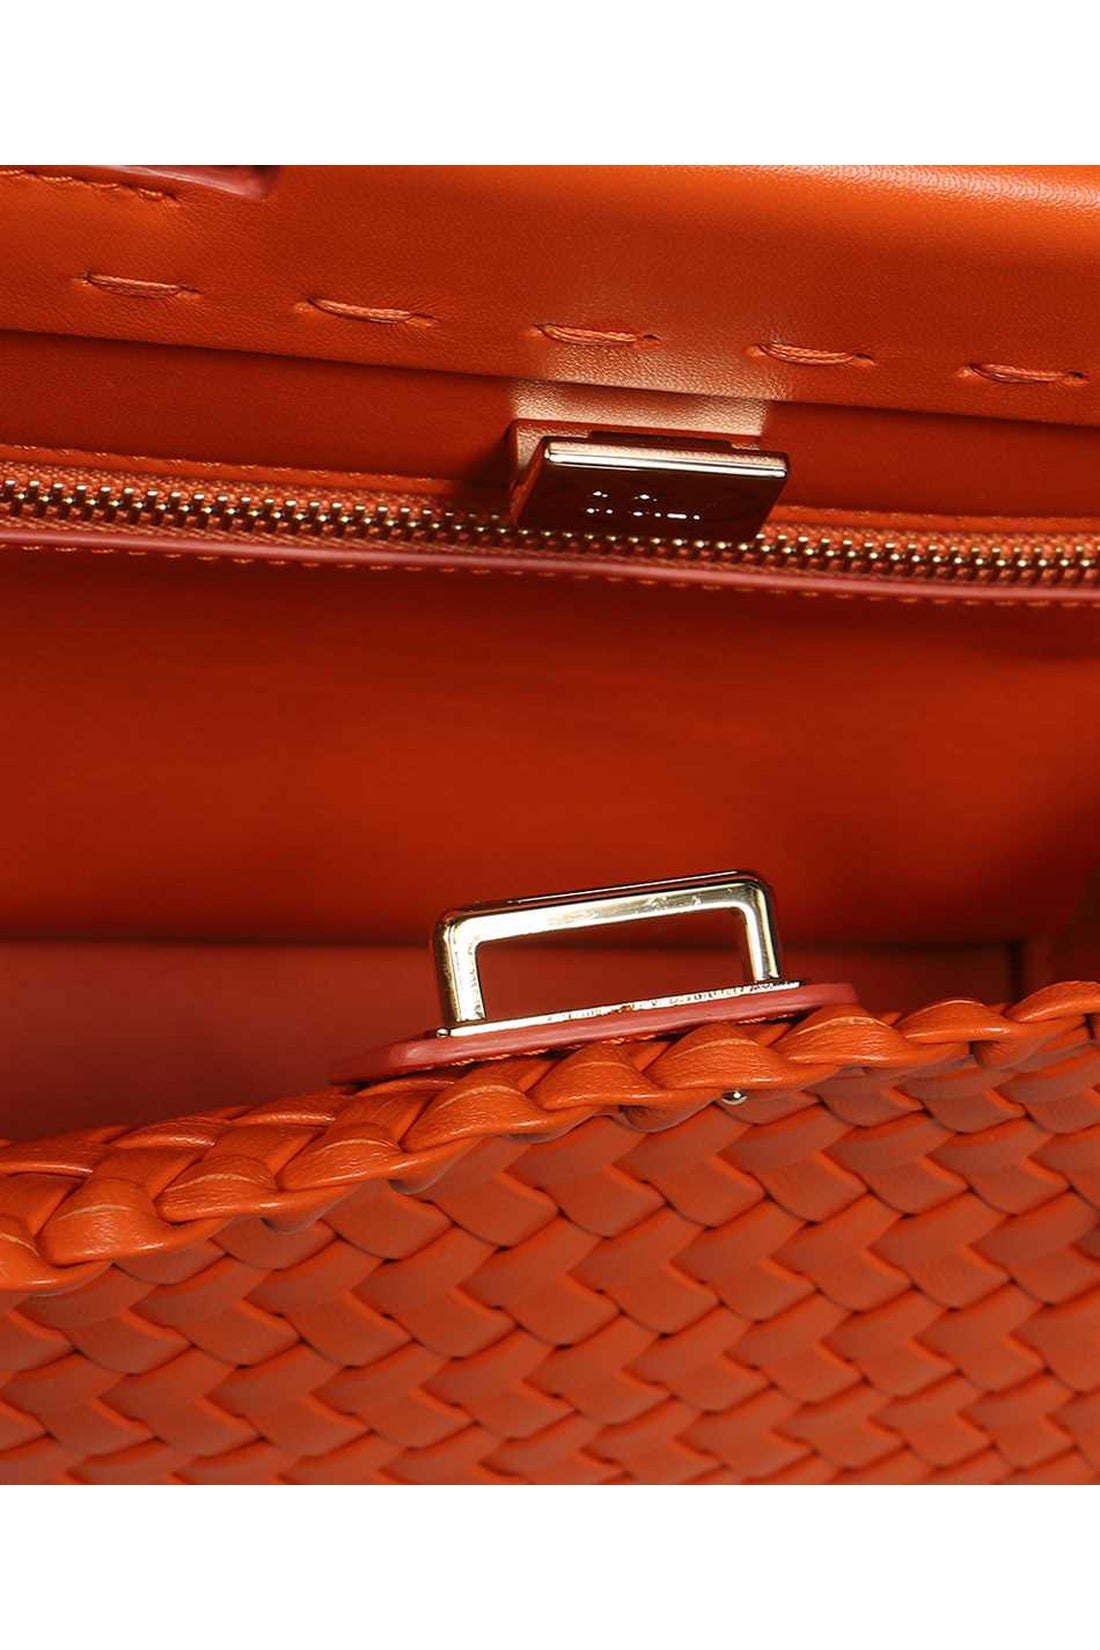 Dolce & Gabbana-OUTLET-SALE-Sicily 62 Soft handbag-ARCHIVIST